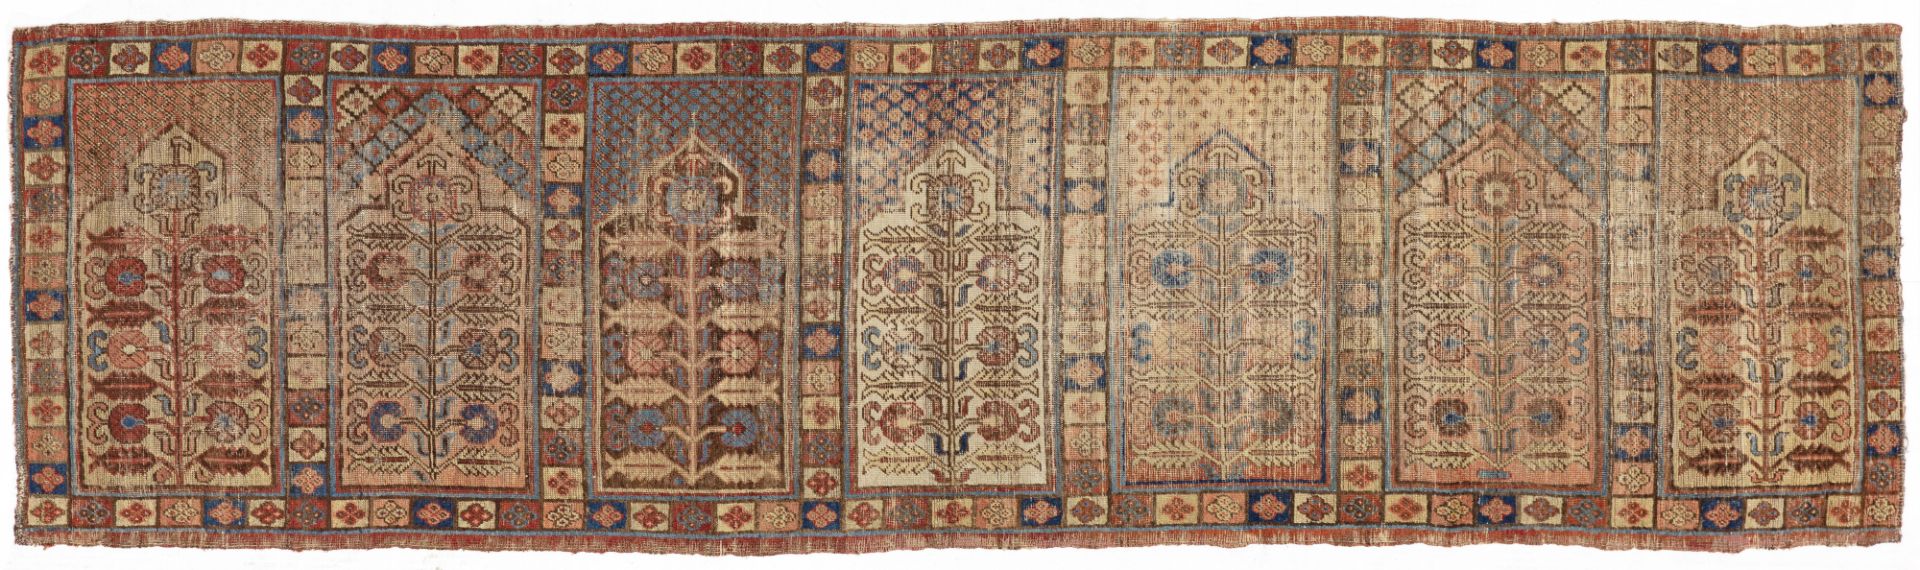 A KHOTA, SAPH, TIBET, CIRCA 1800-1850